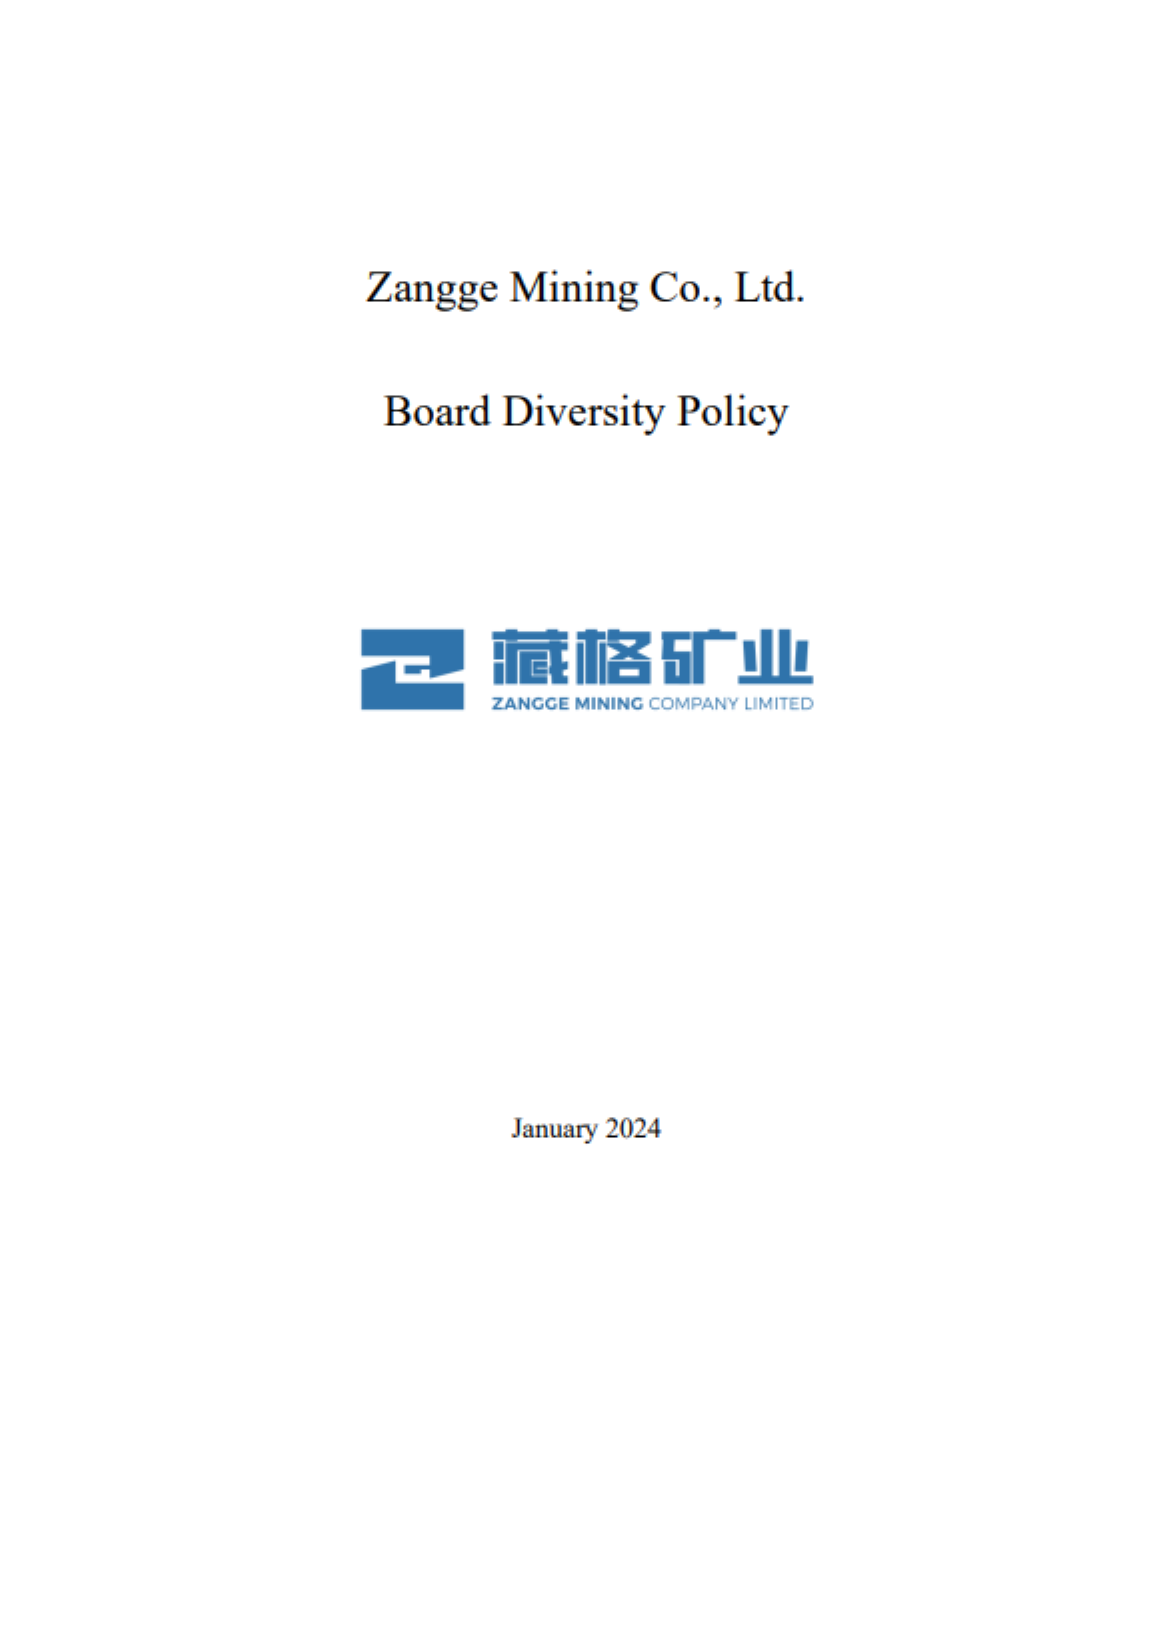 Board Diversity Policy of Zangge Mining Co., Ltd.